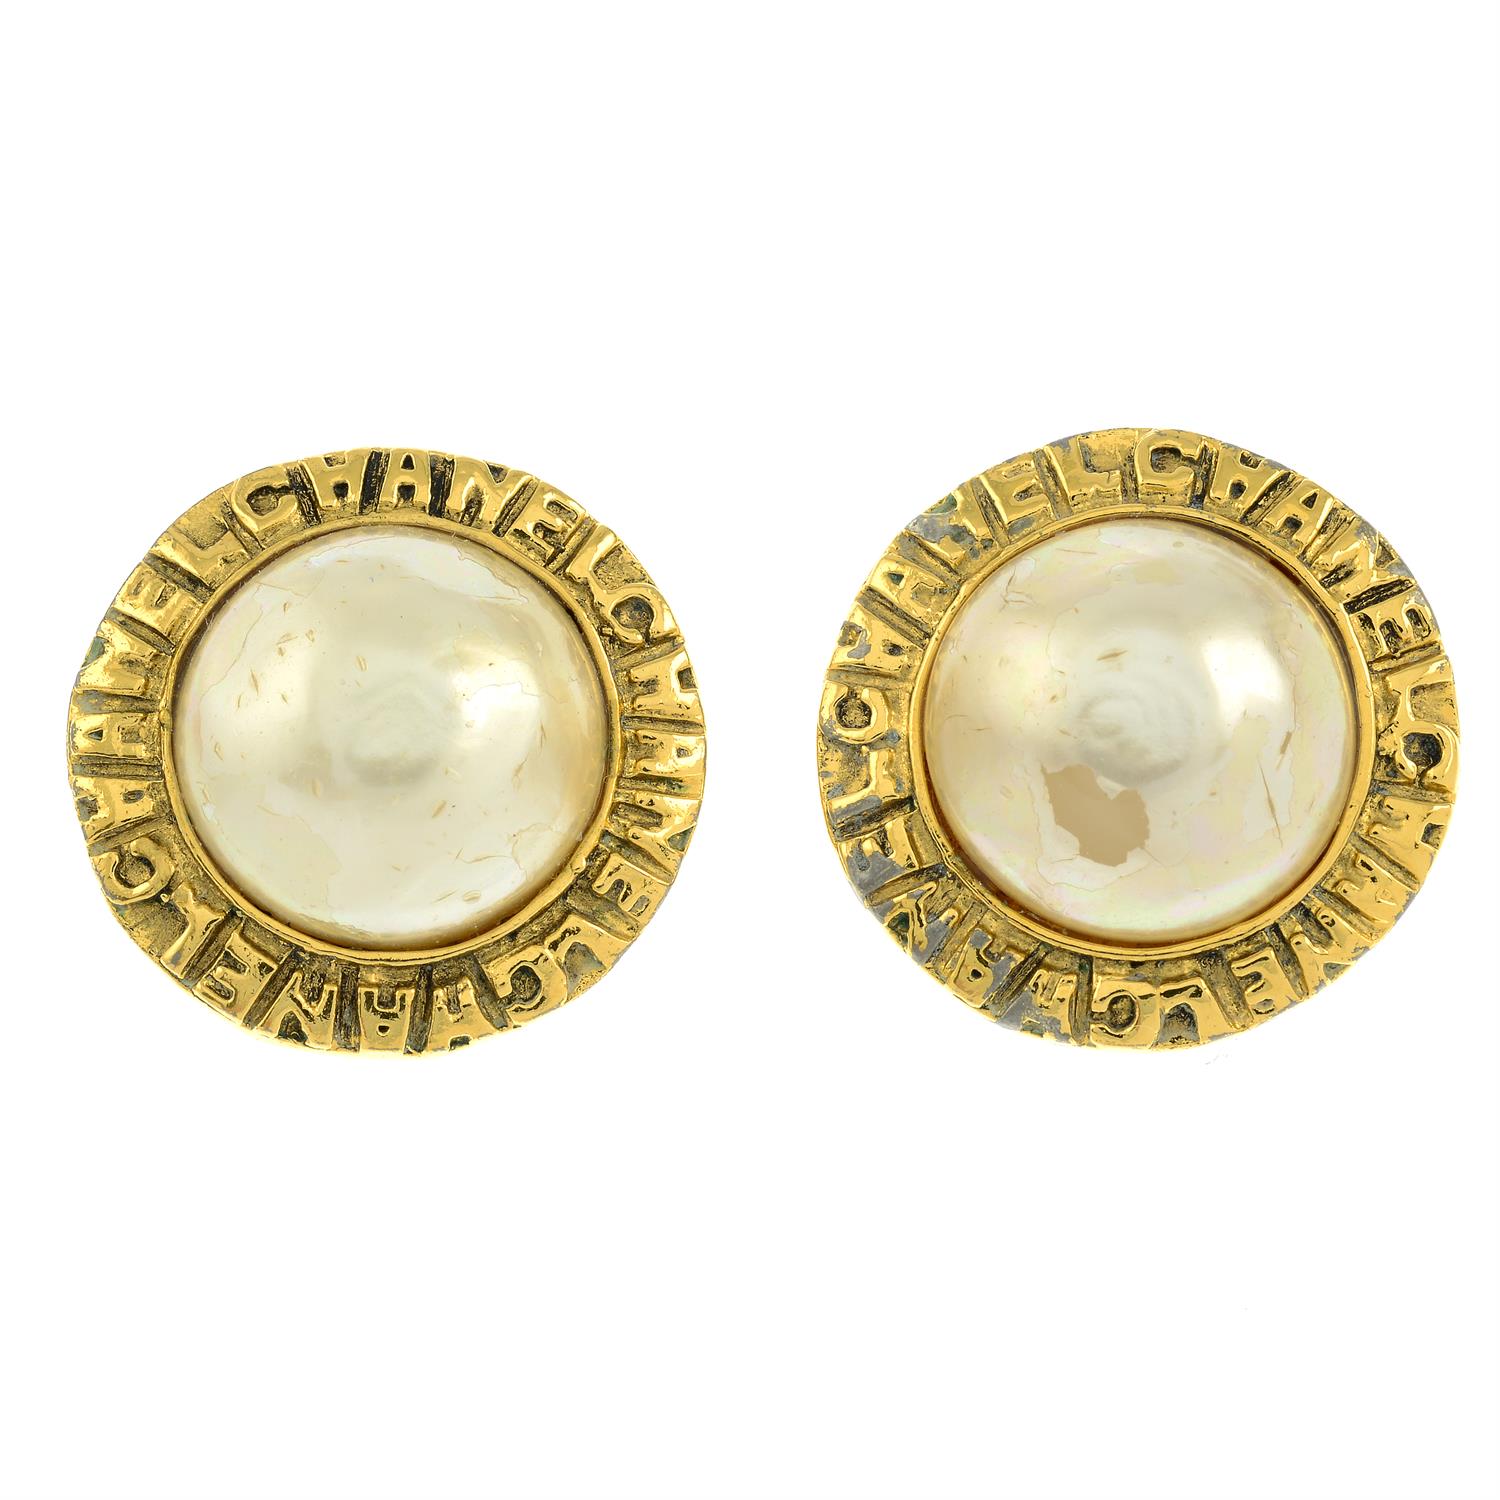 CHANEL - a pair of imitation circular-shape clip-on earrings.